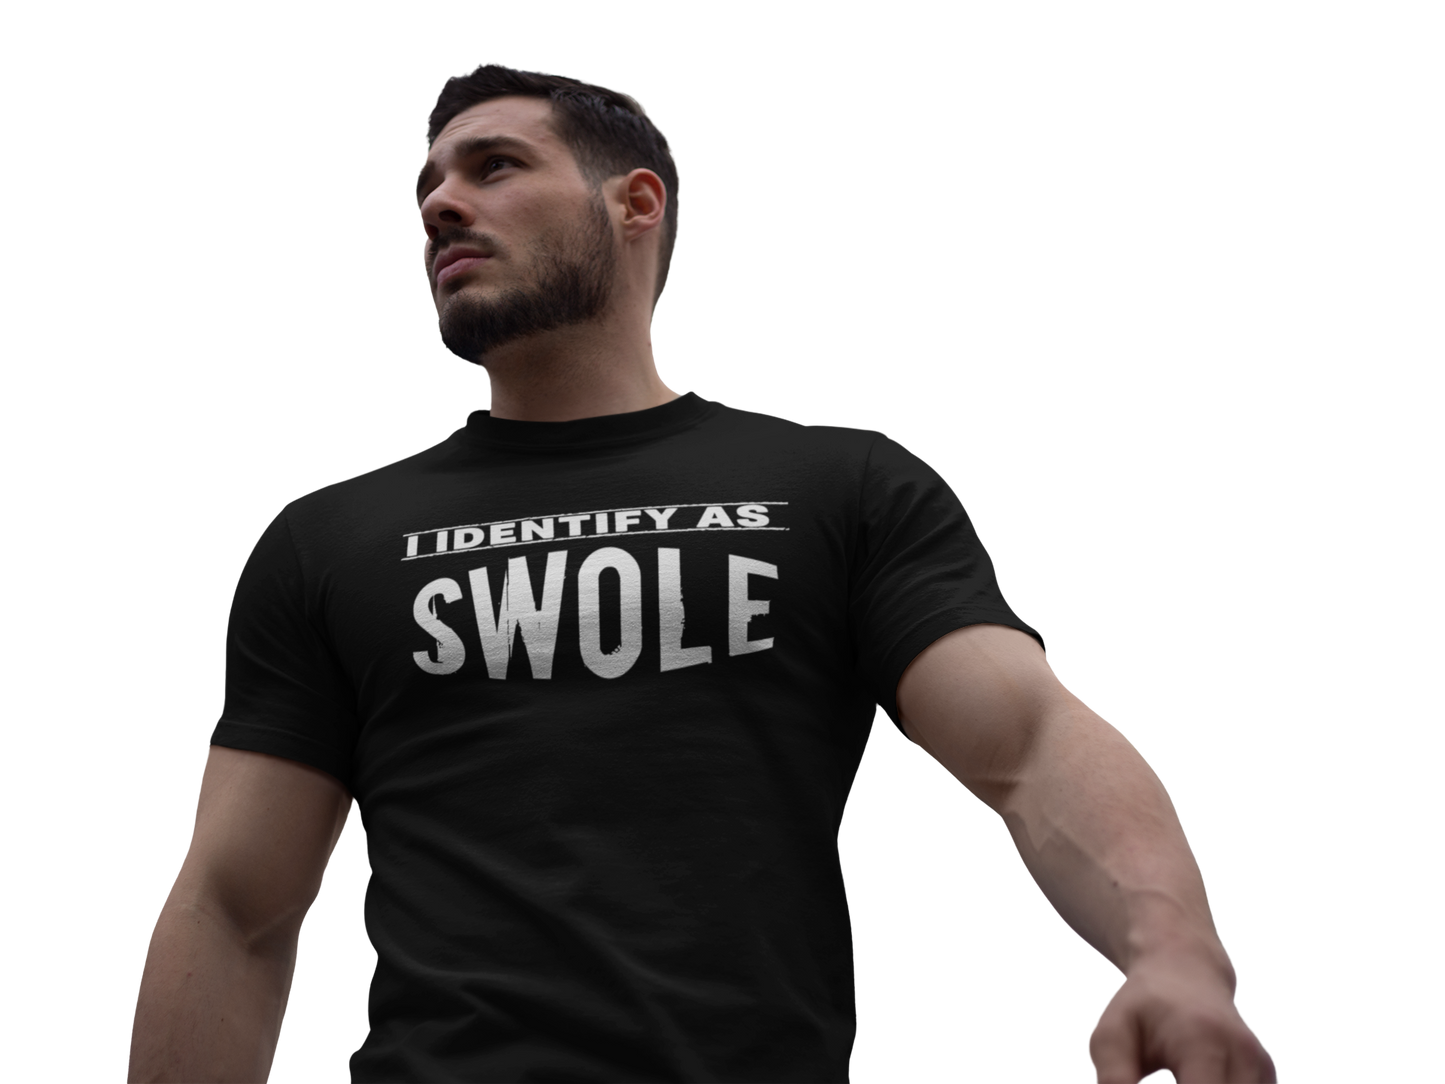 I Identify as SWOLE Workout Gym T Shirt